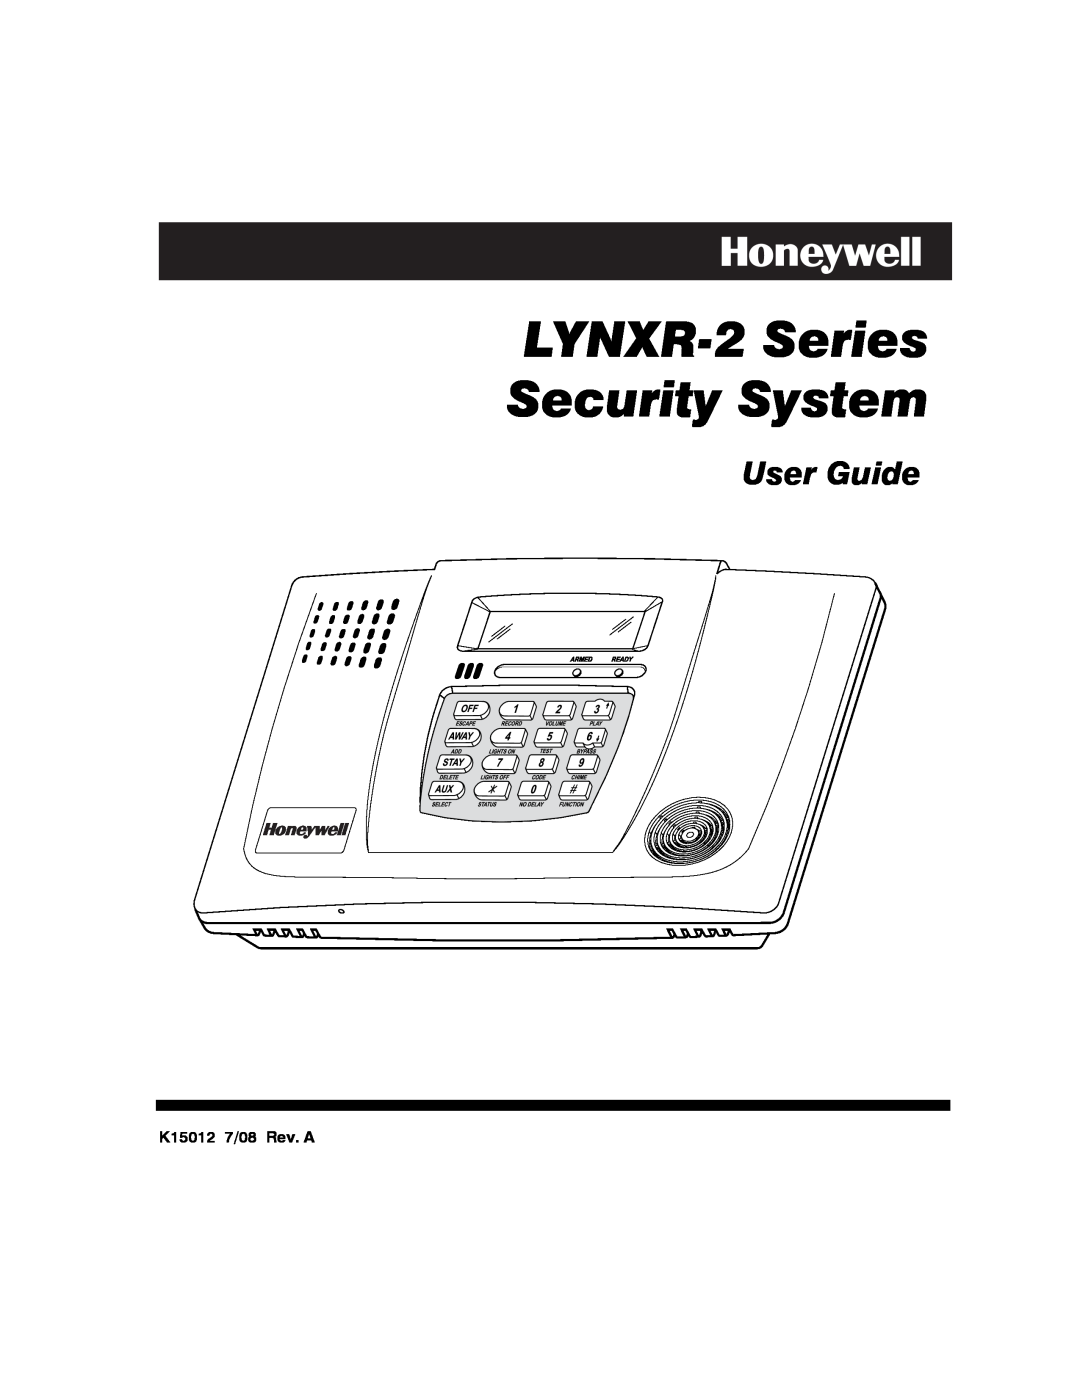 Honeywell manual User Guide, K15012 7/08 Rev. A, LYNXR-2Series Security System 